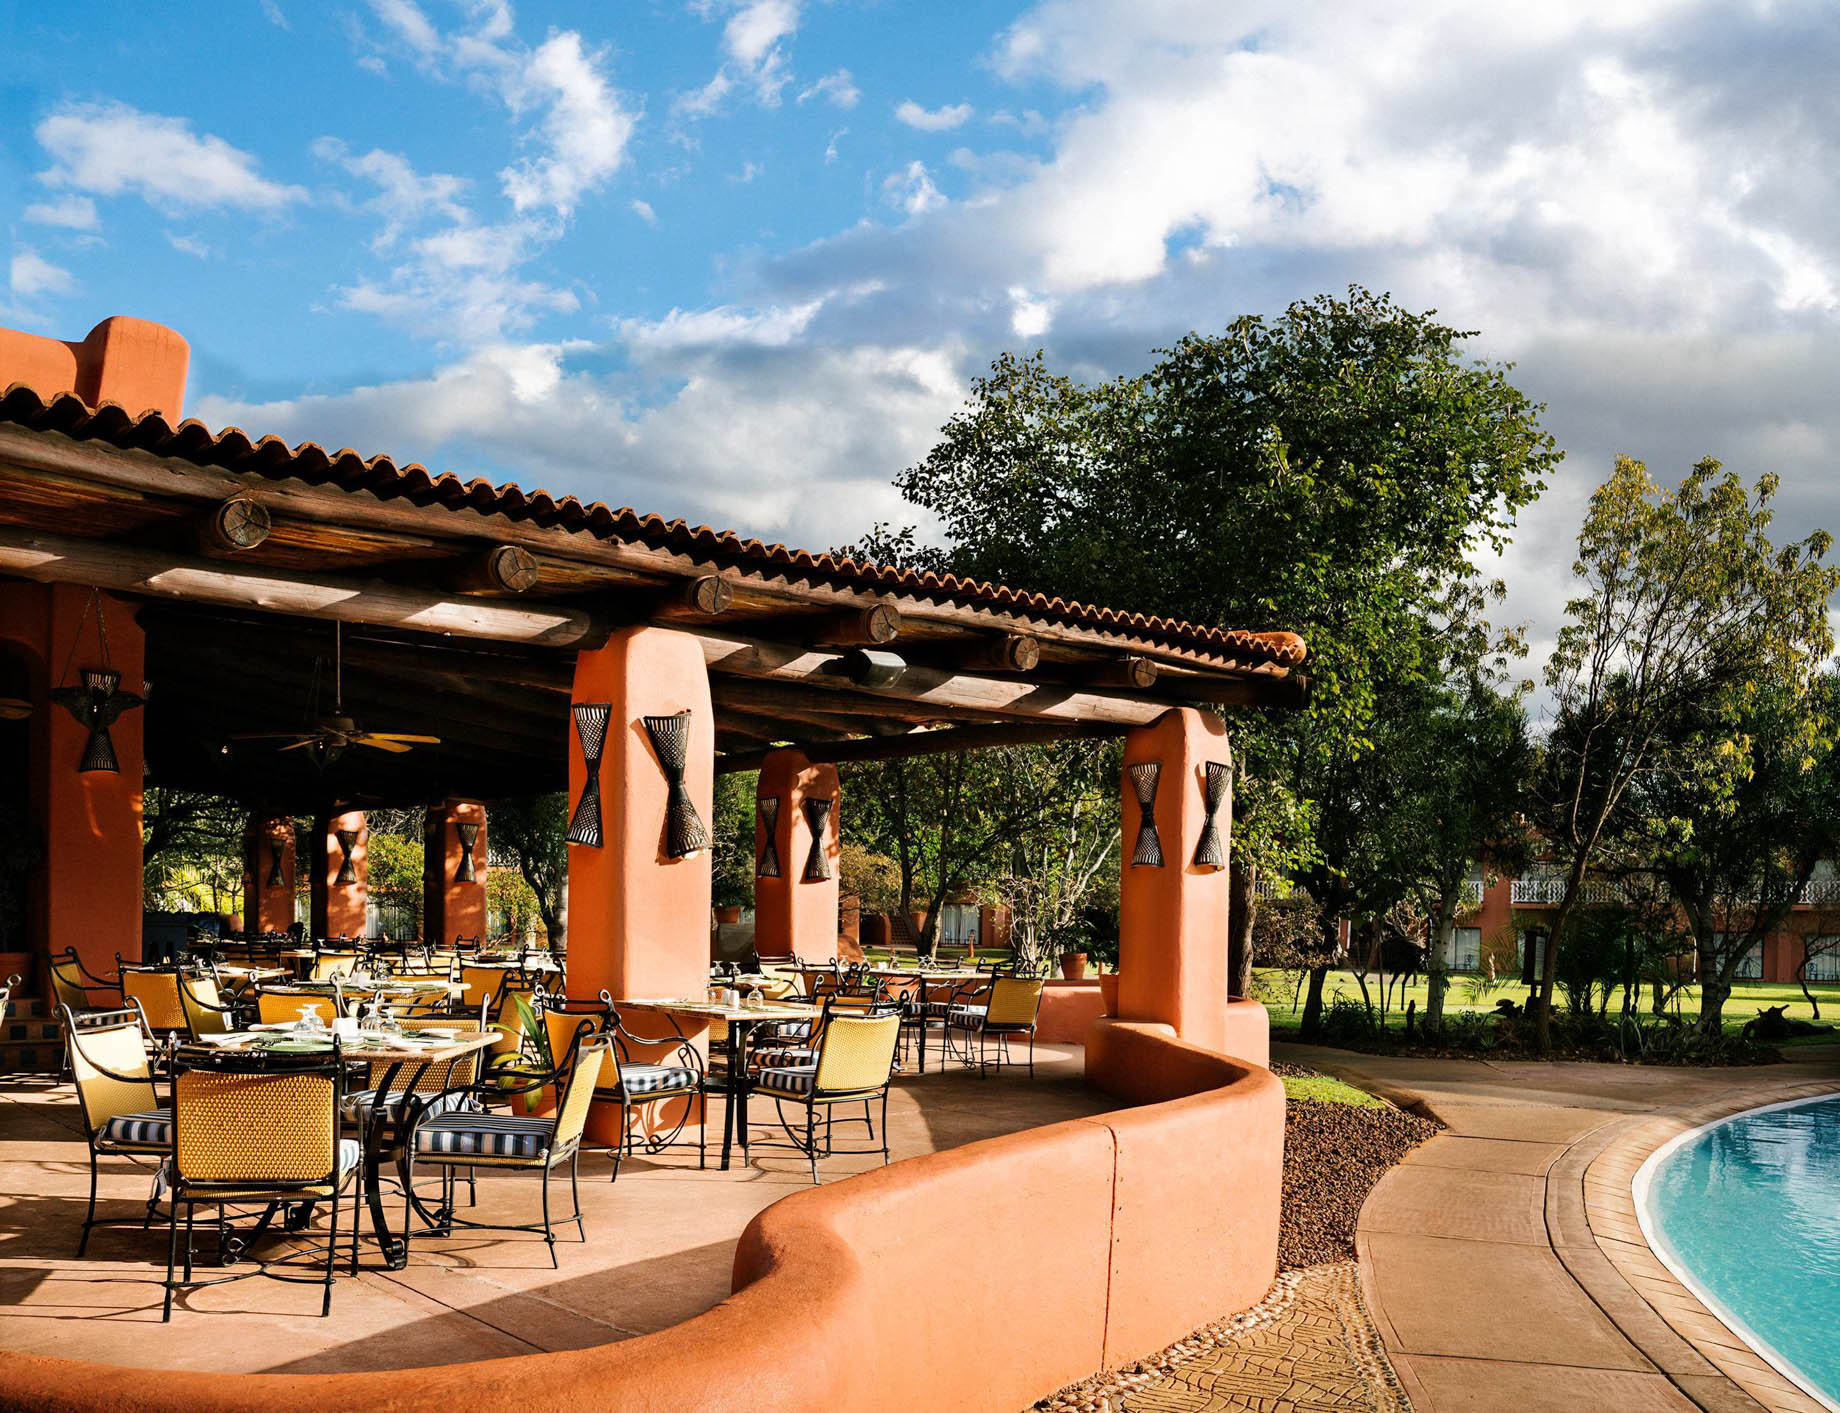 Avani Victoria Falls Resort - Livingstone, Zambia - Restaurant